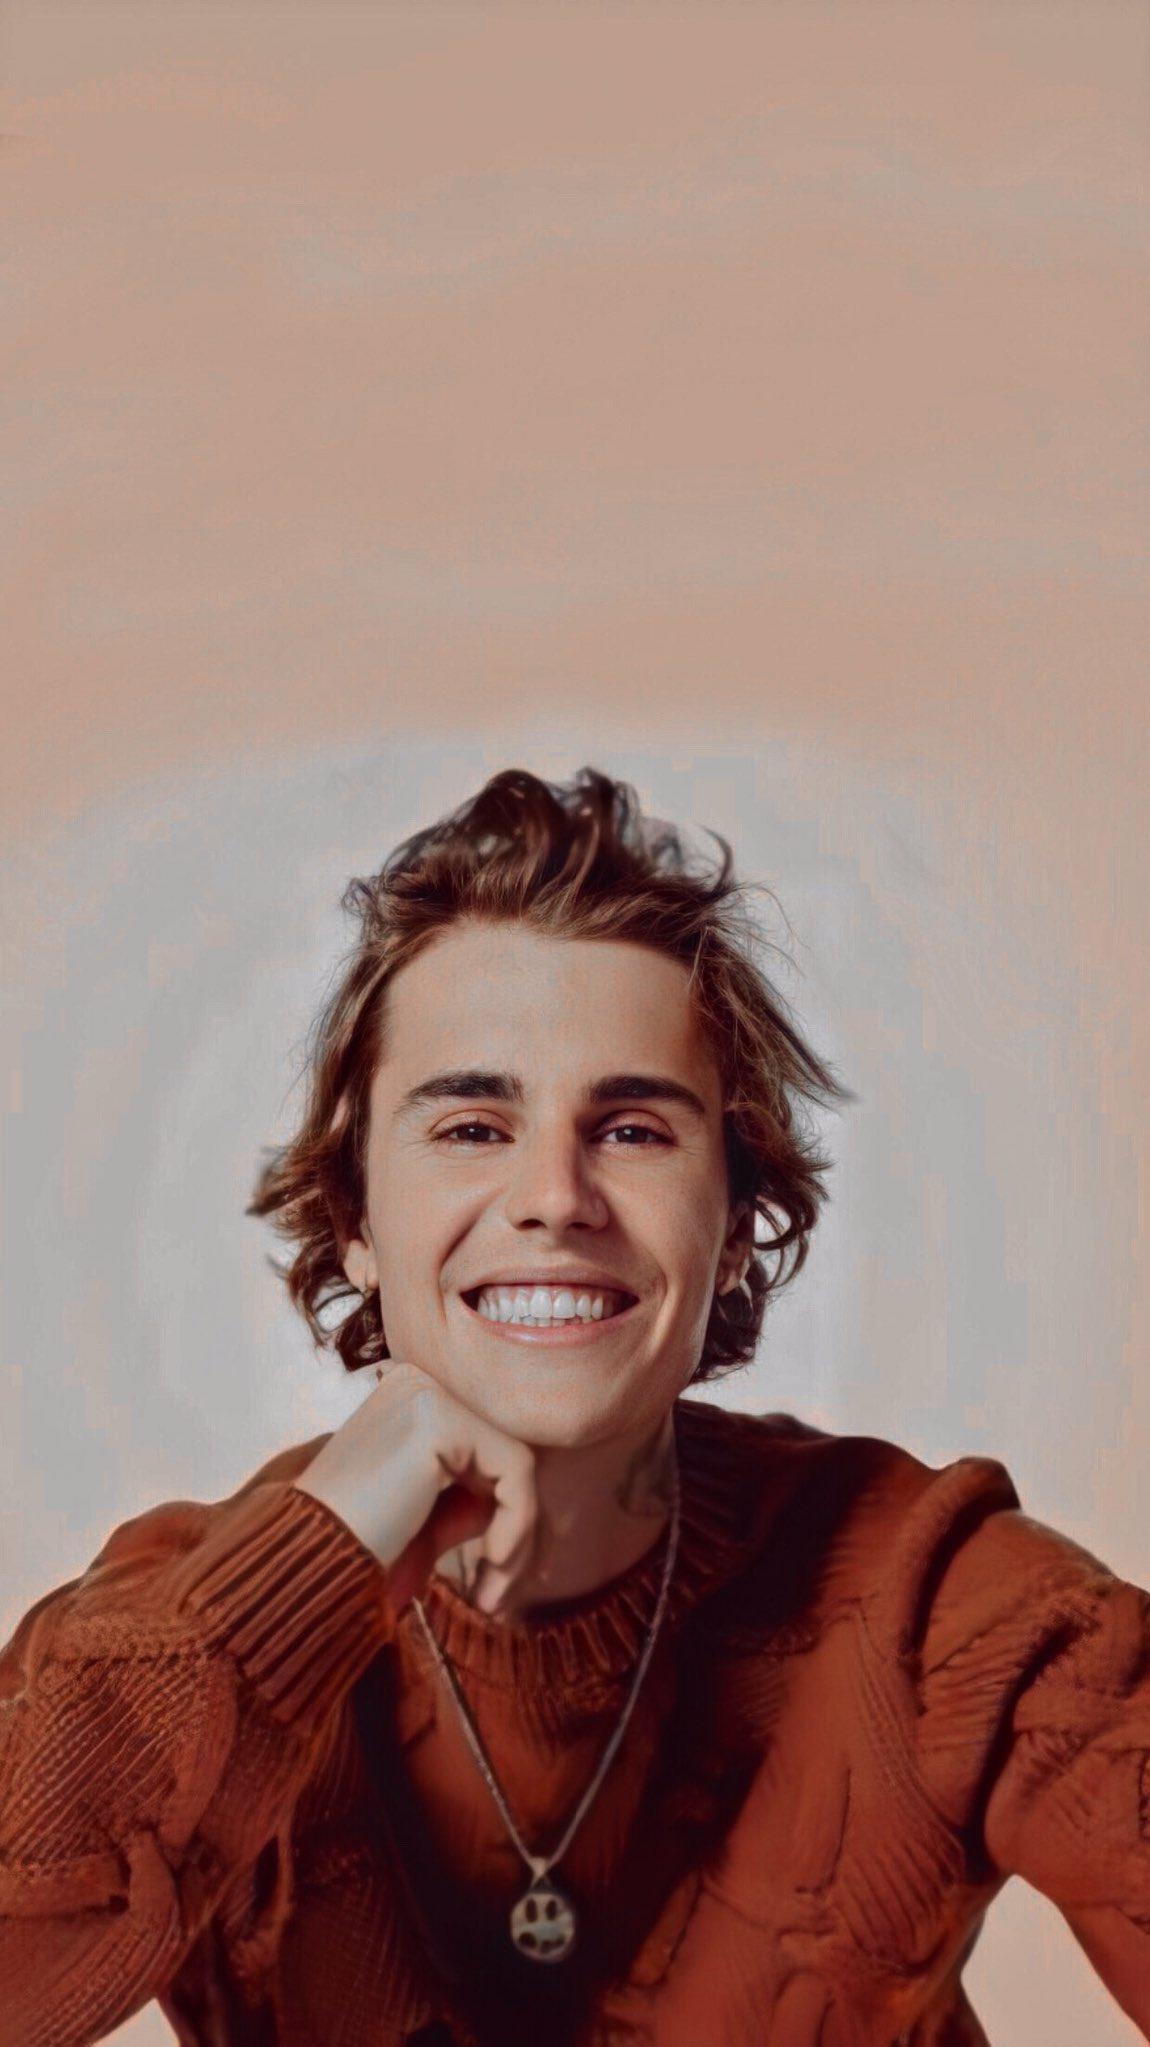 Justin Bieber Wallpapers Top Justin Bieber Backgrounds Download